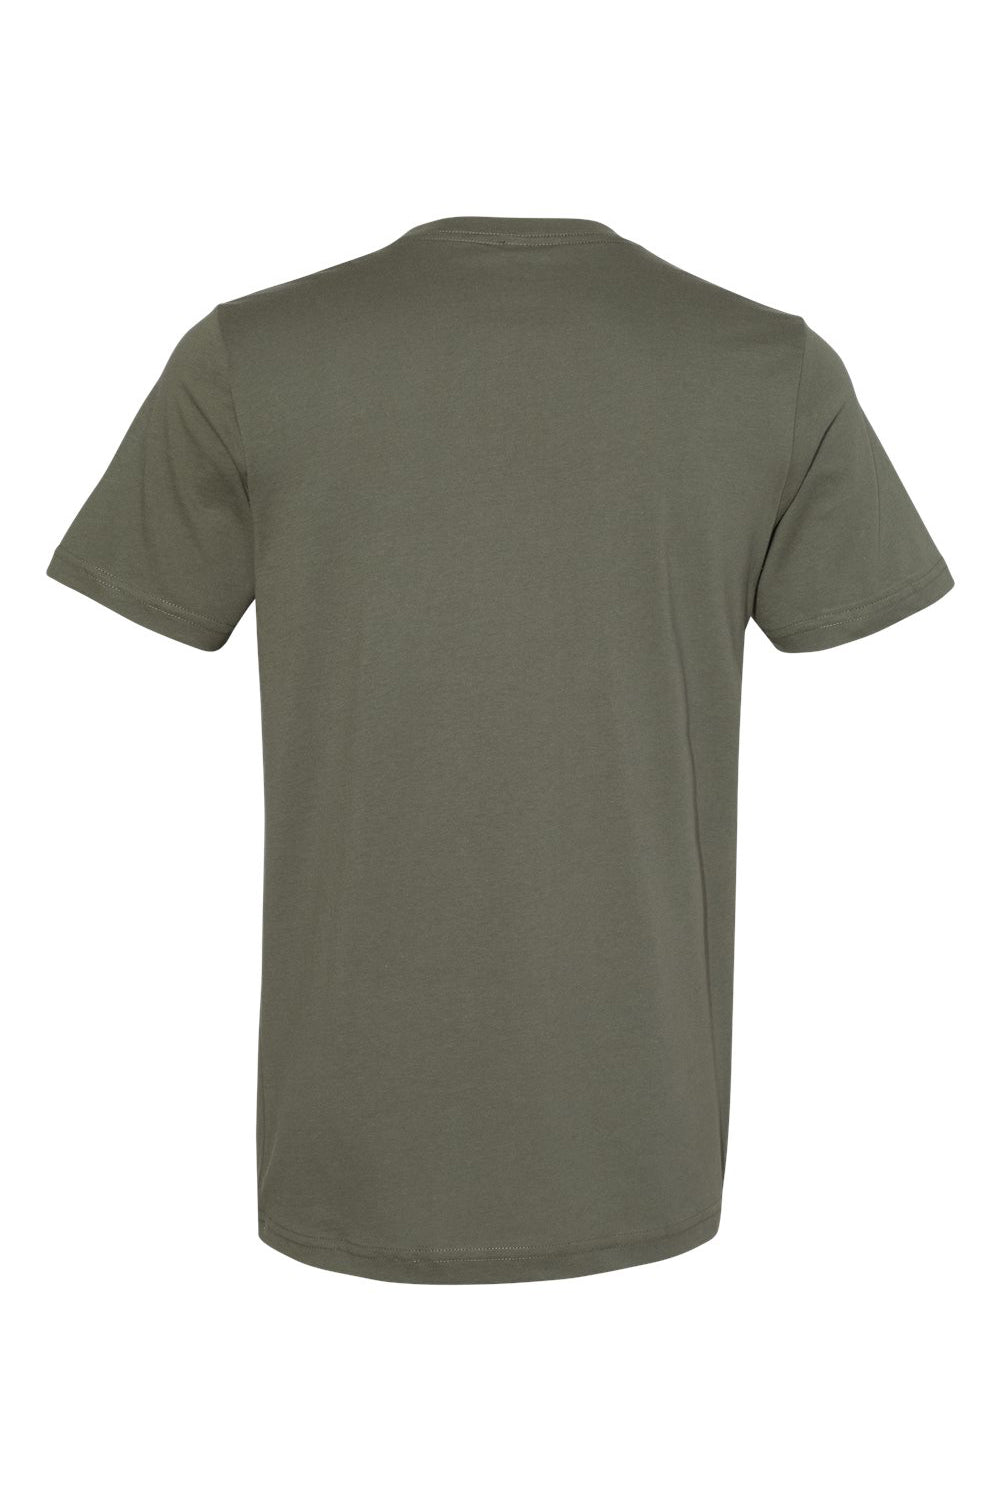 Bella + Canvas 3001U/3001USA Mens USA Made Jersey Short Sleeve Crewneck T-Shirt Military Green Flat Back